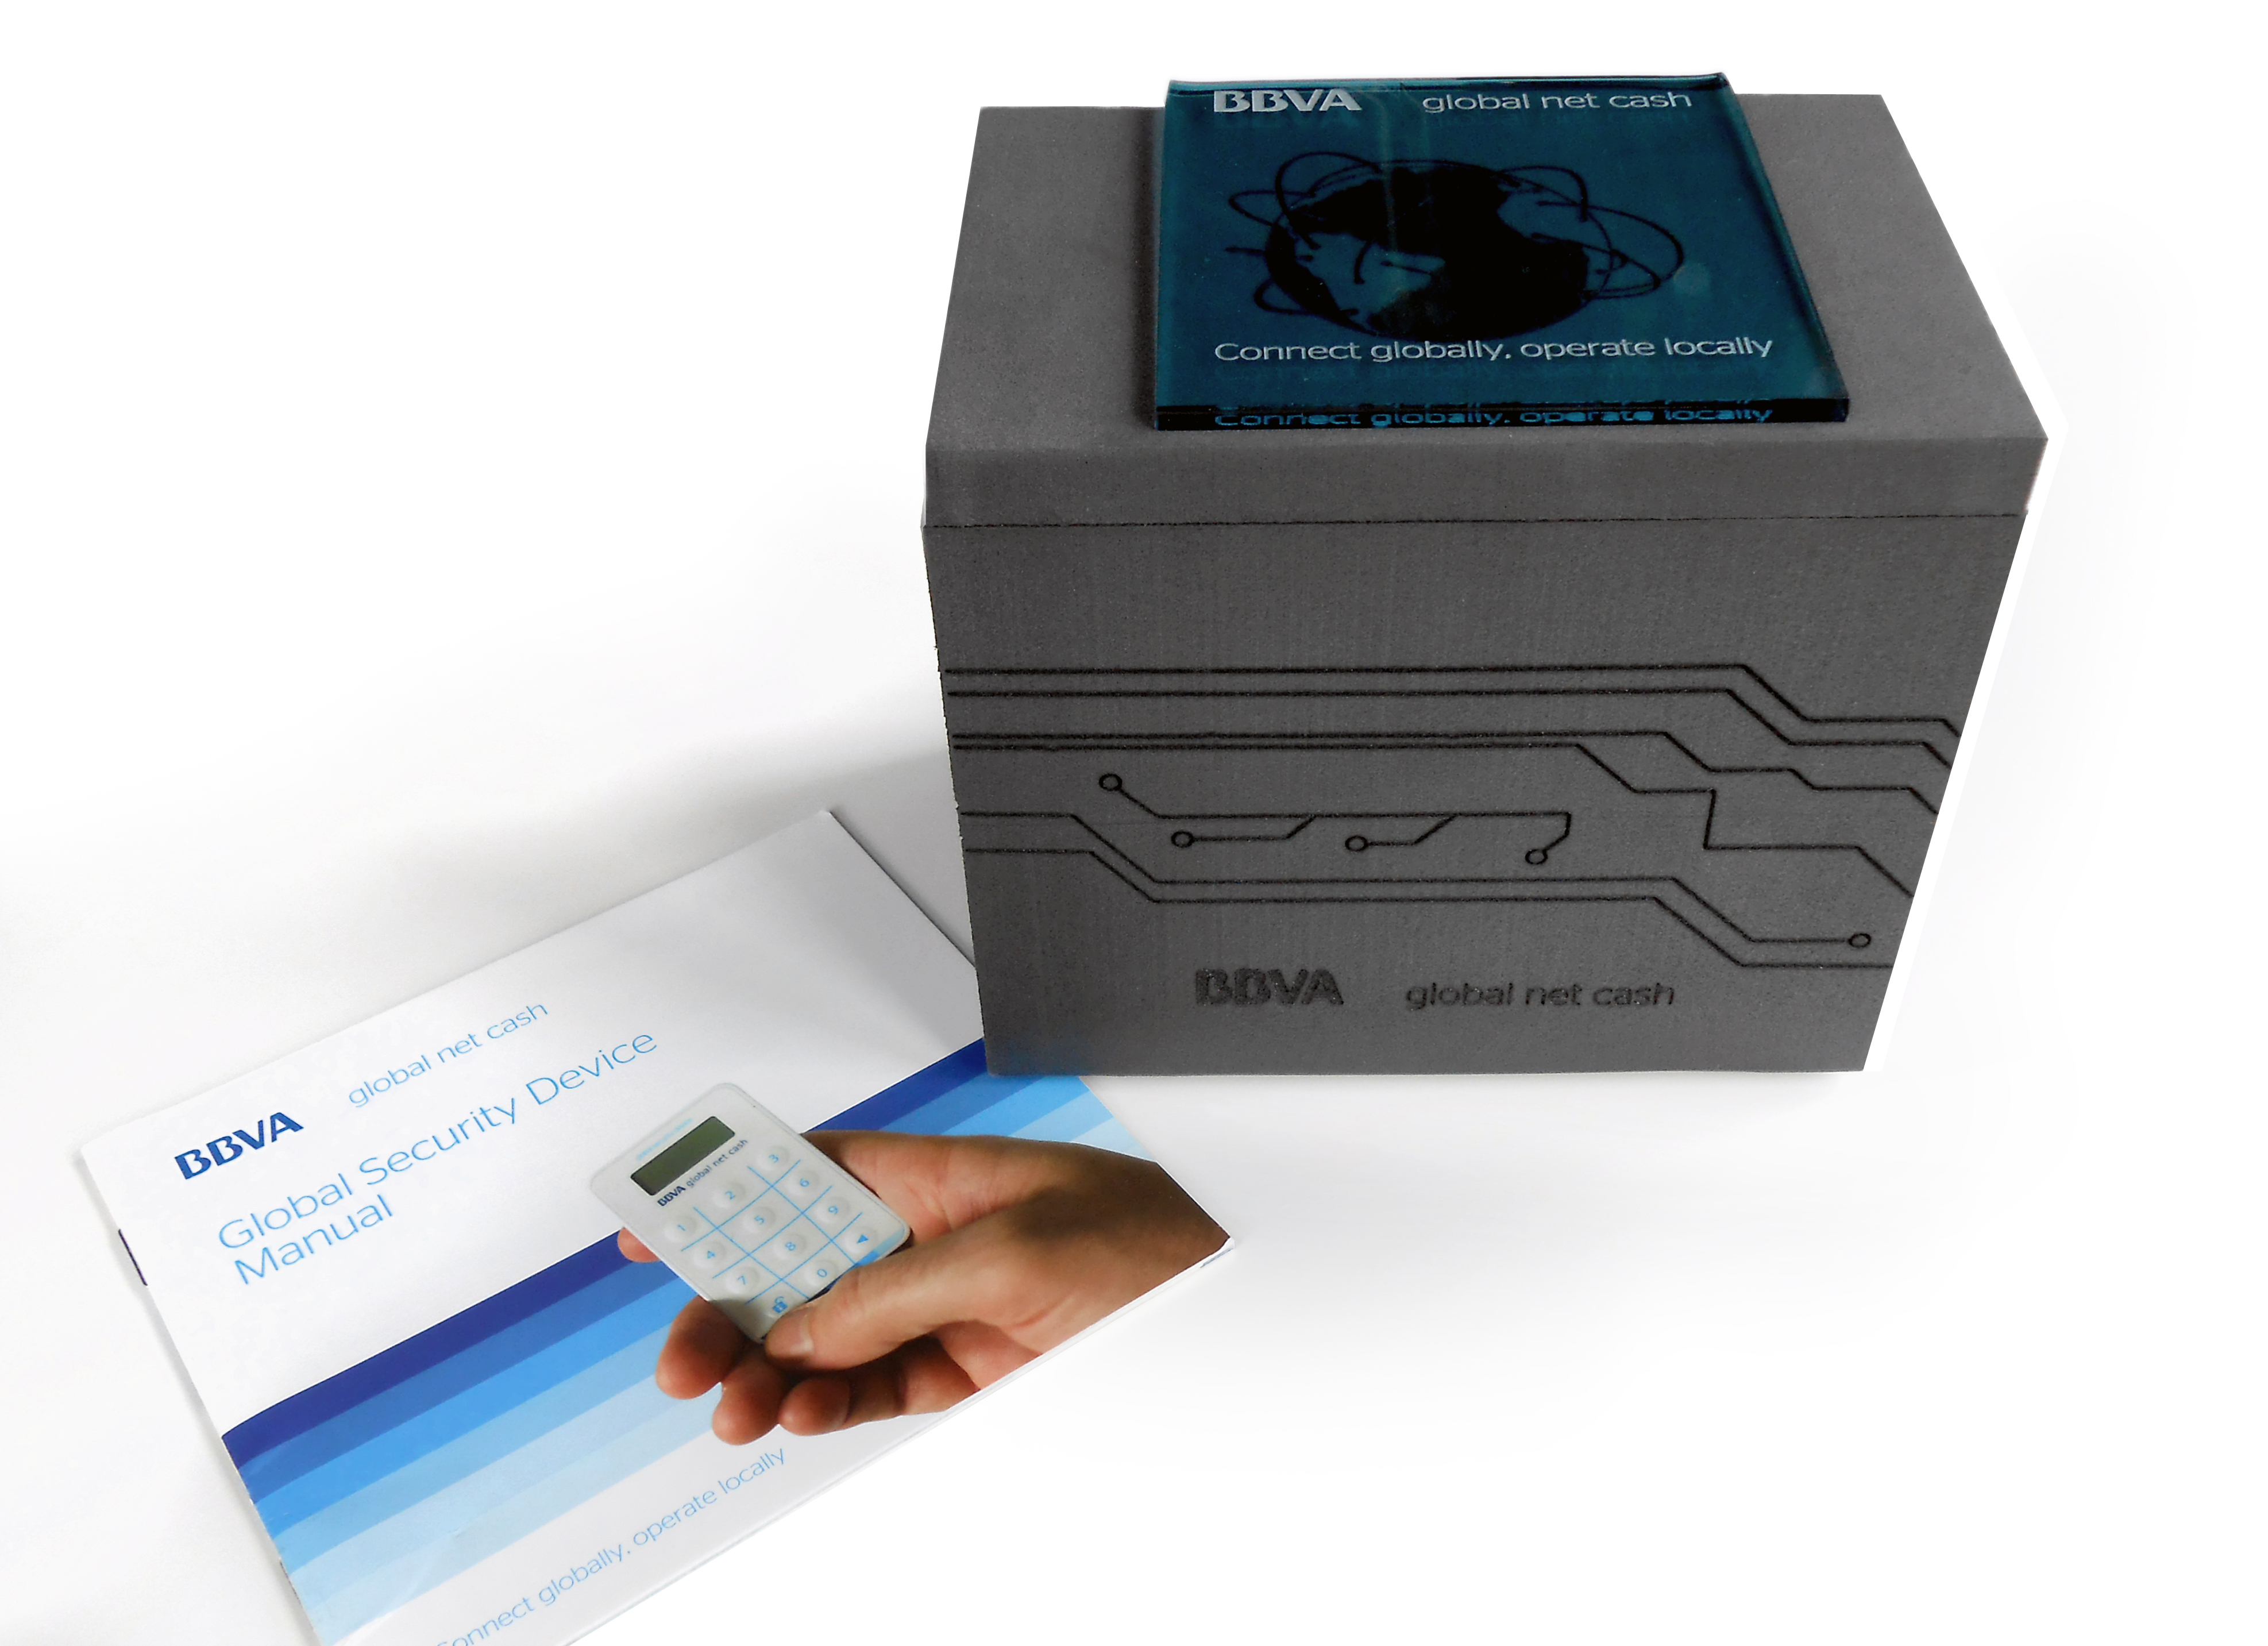 Packaging BBVA Global Net cash by aktuart - Mikel Rico - Creative Work - $i